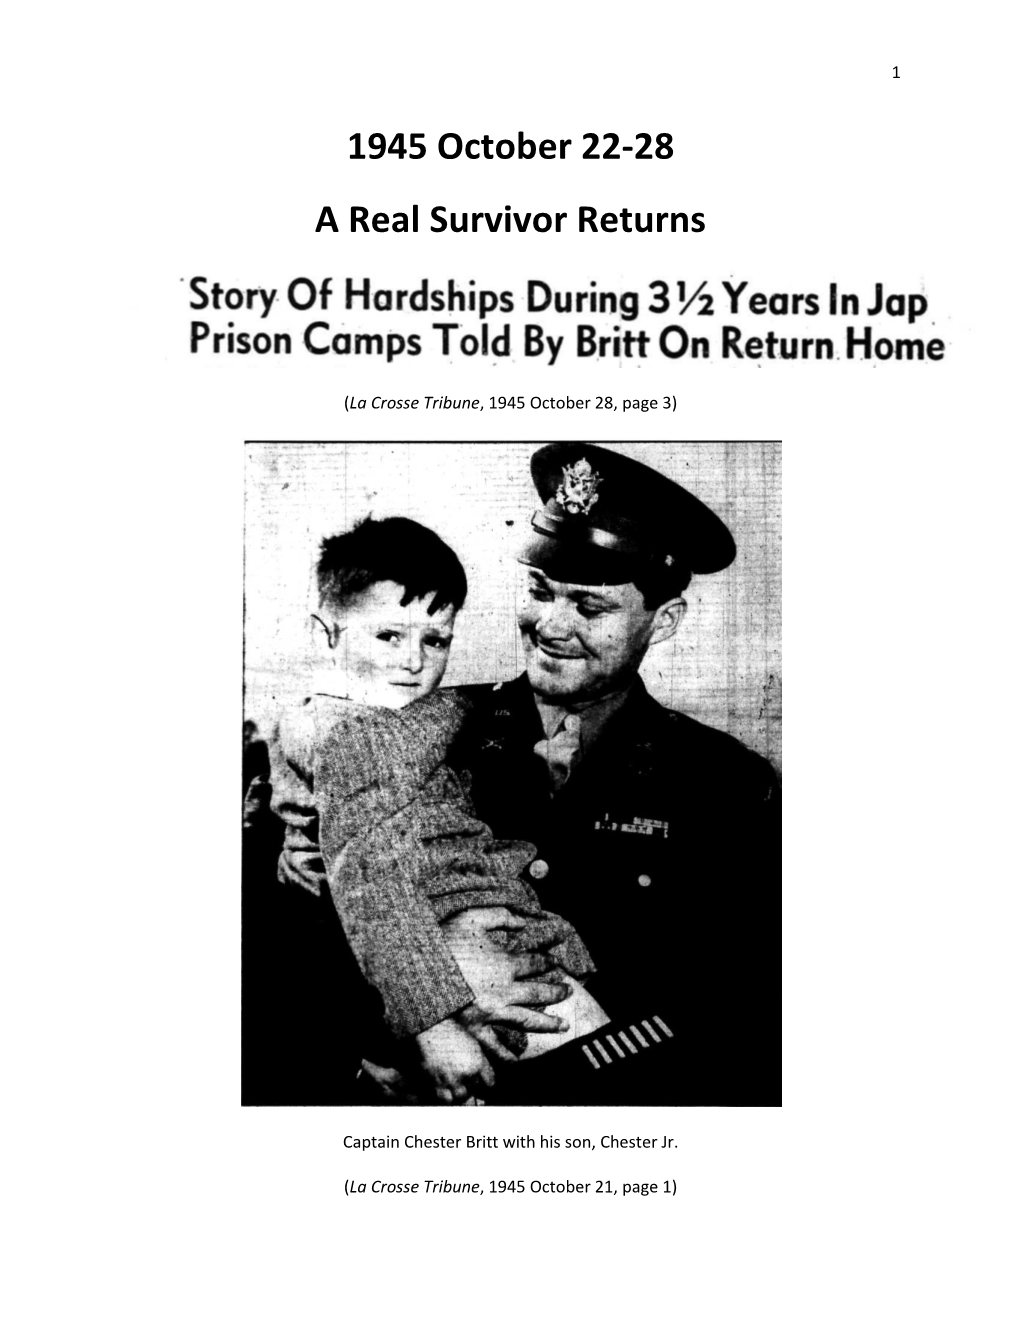 1945 October 22-28 a Real Survivor Returns